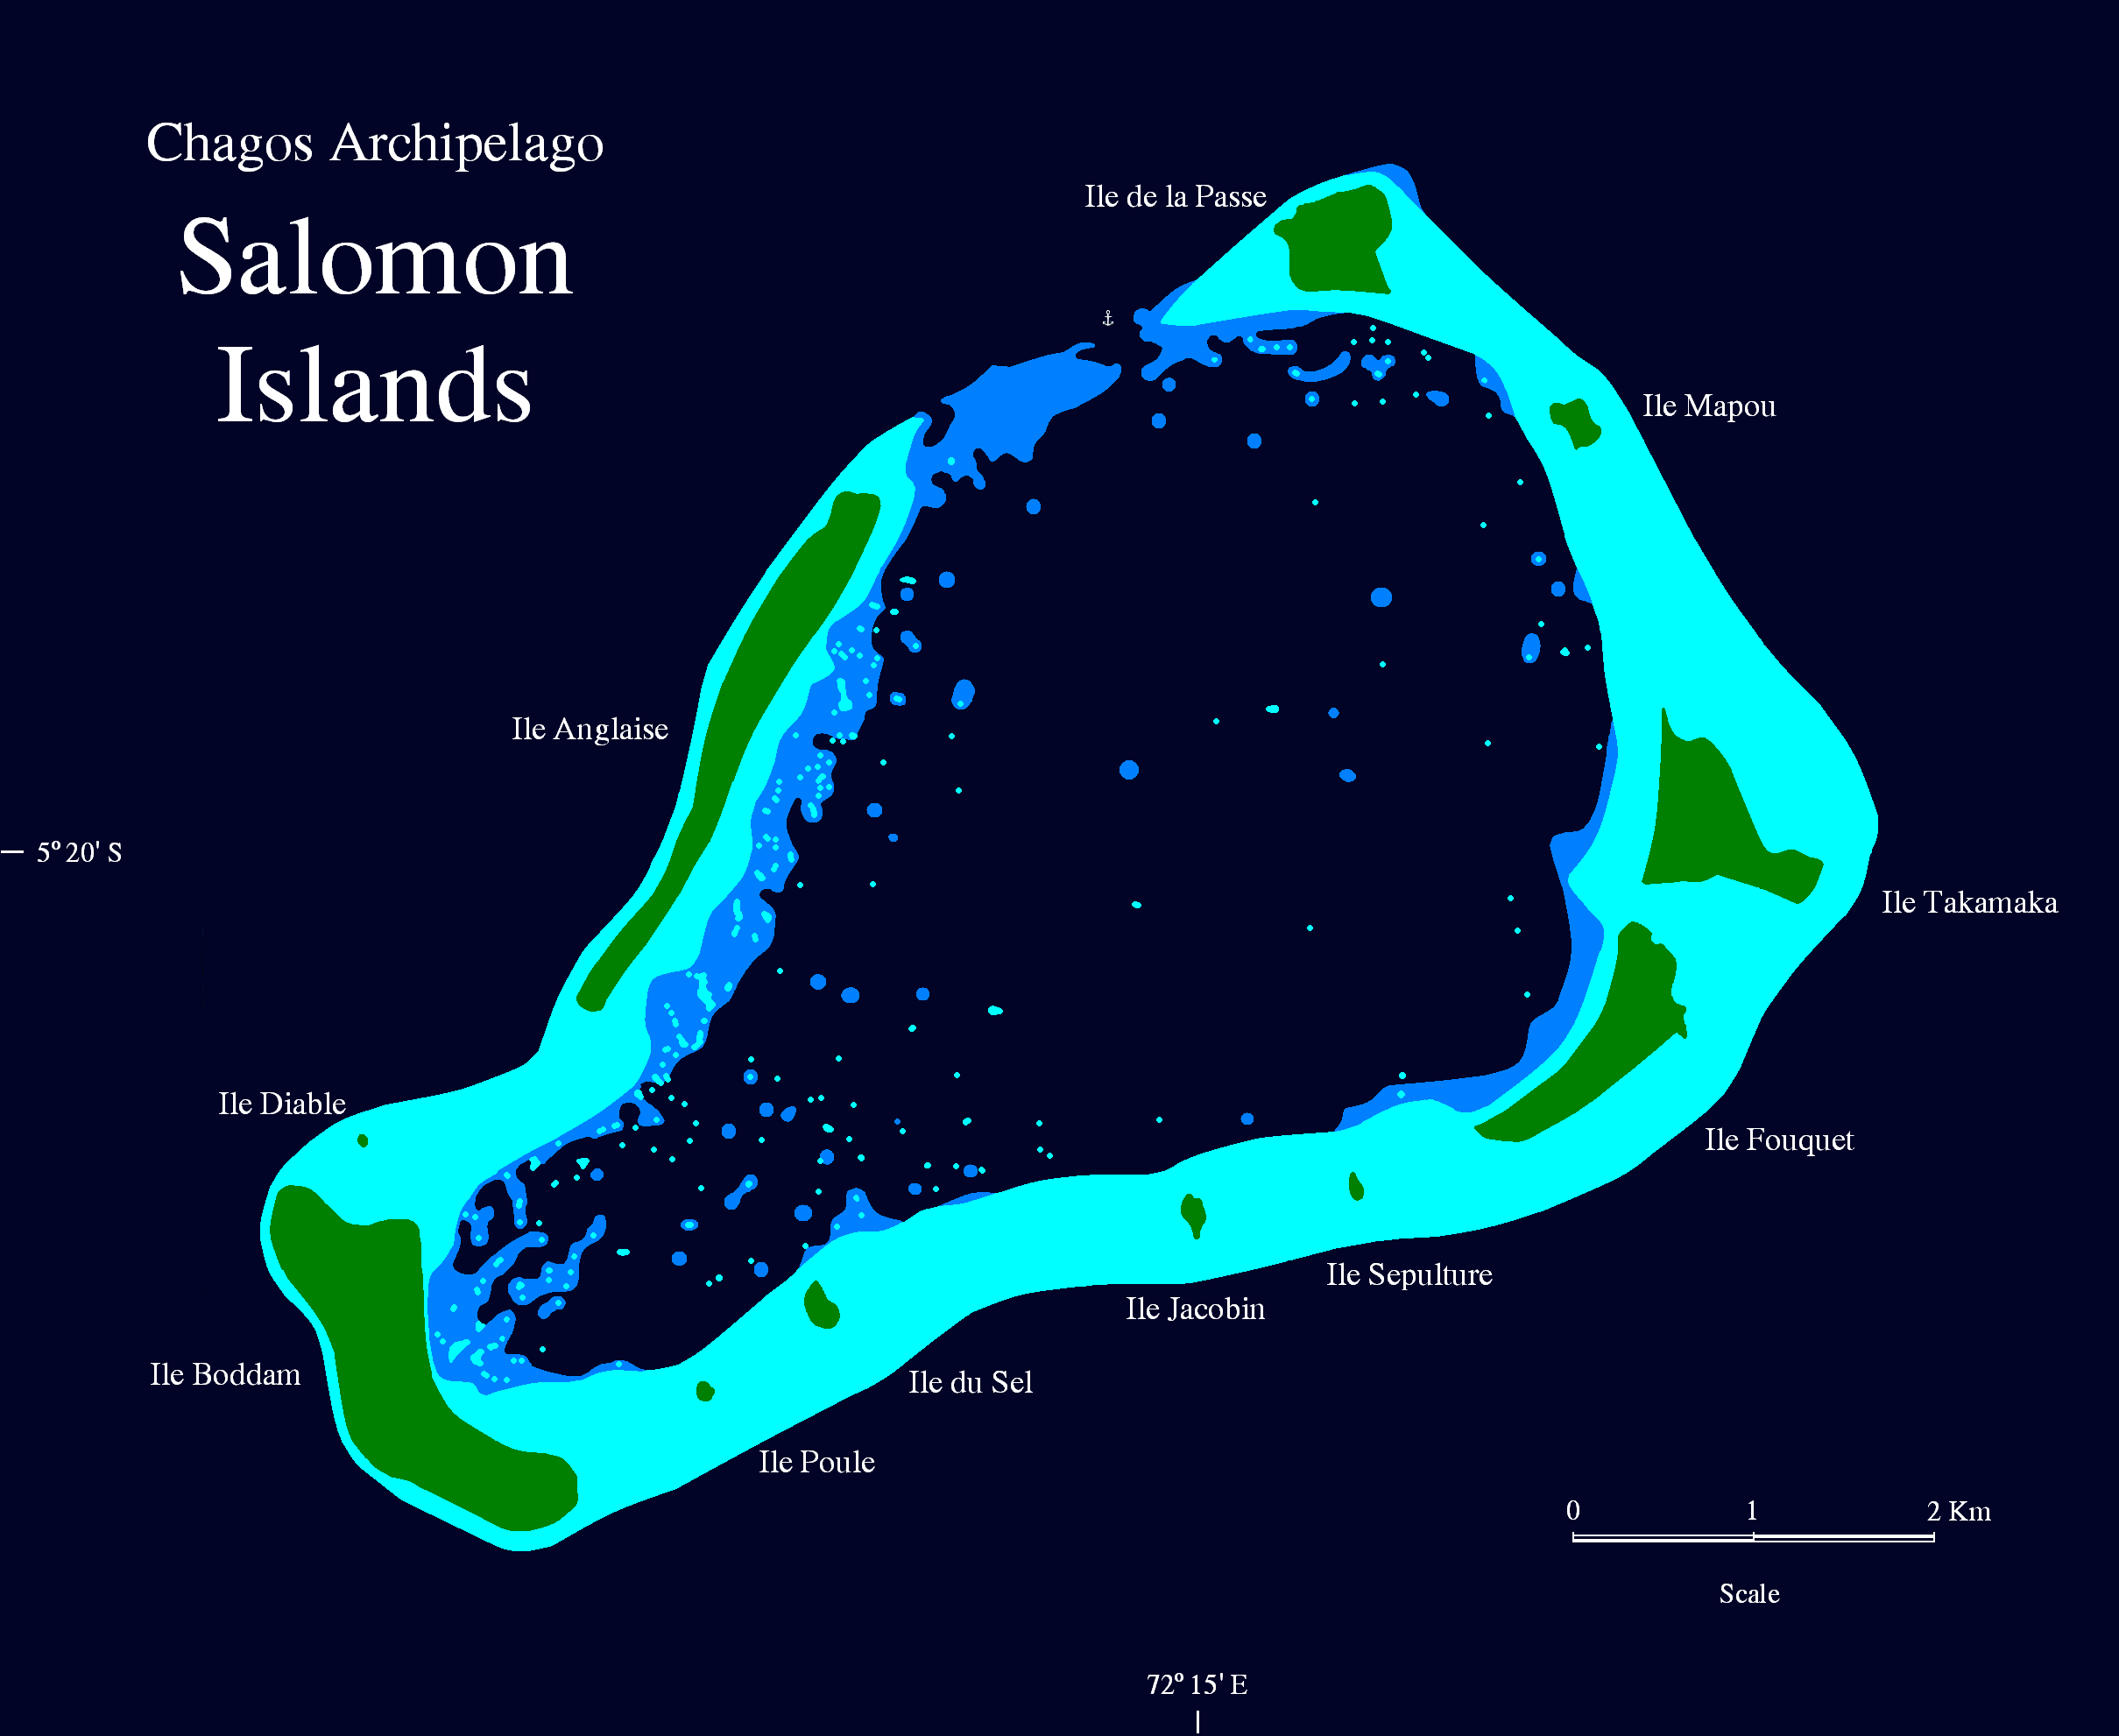 Salomon Islands - Wikipedia